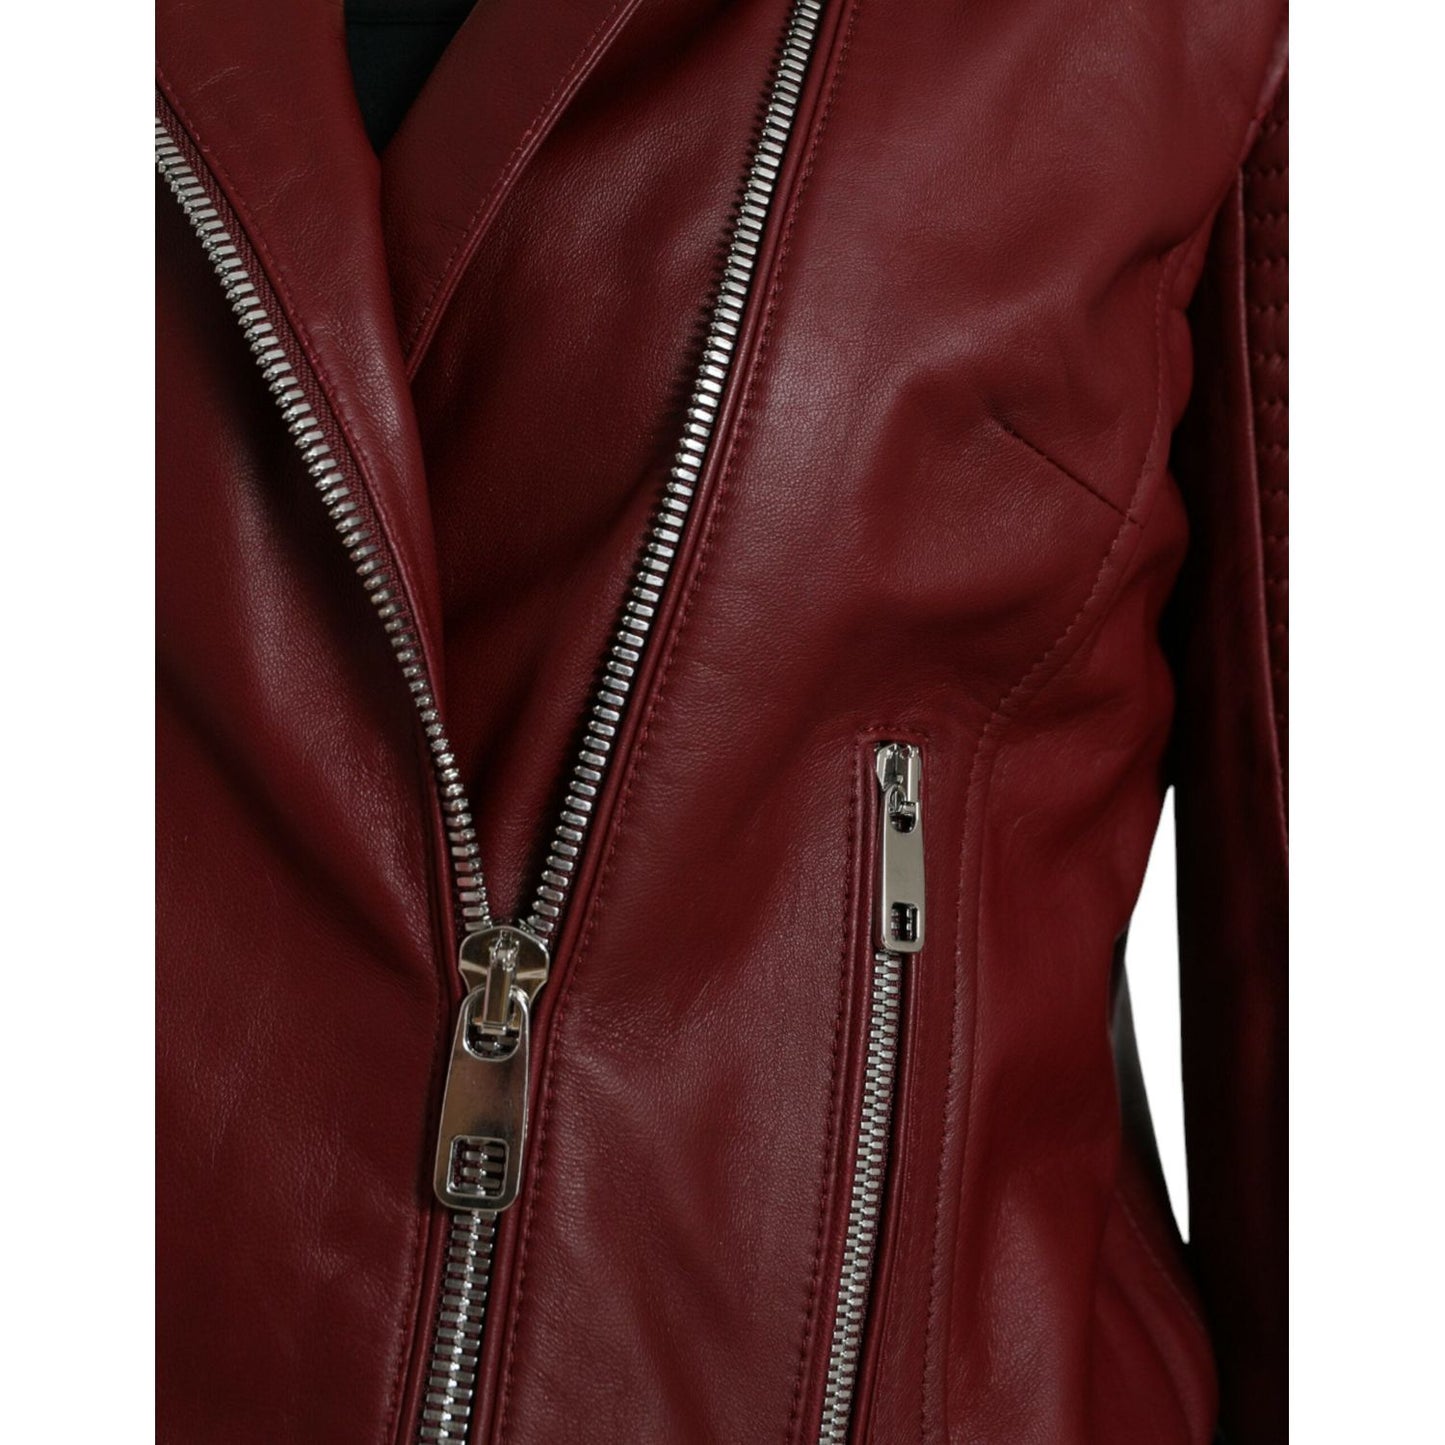 Dolce & Gabbana Bordeaux Biker Leather Jacket bordeaux-leather-biker-coat-lambskin-jacket 465A9337-BG-scaled-d04ac094-714.jpg